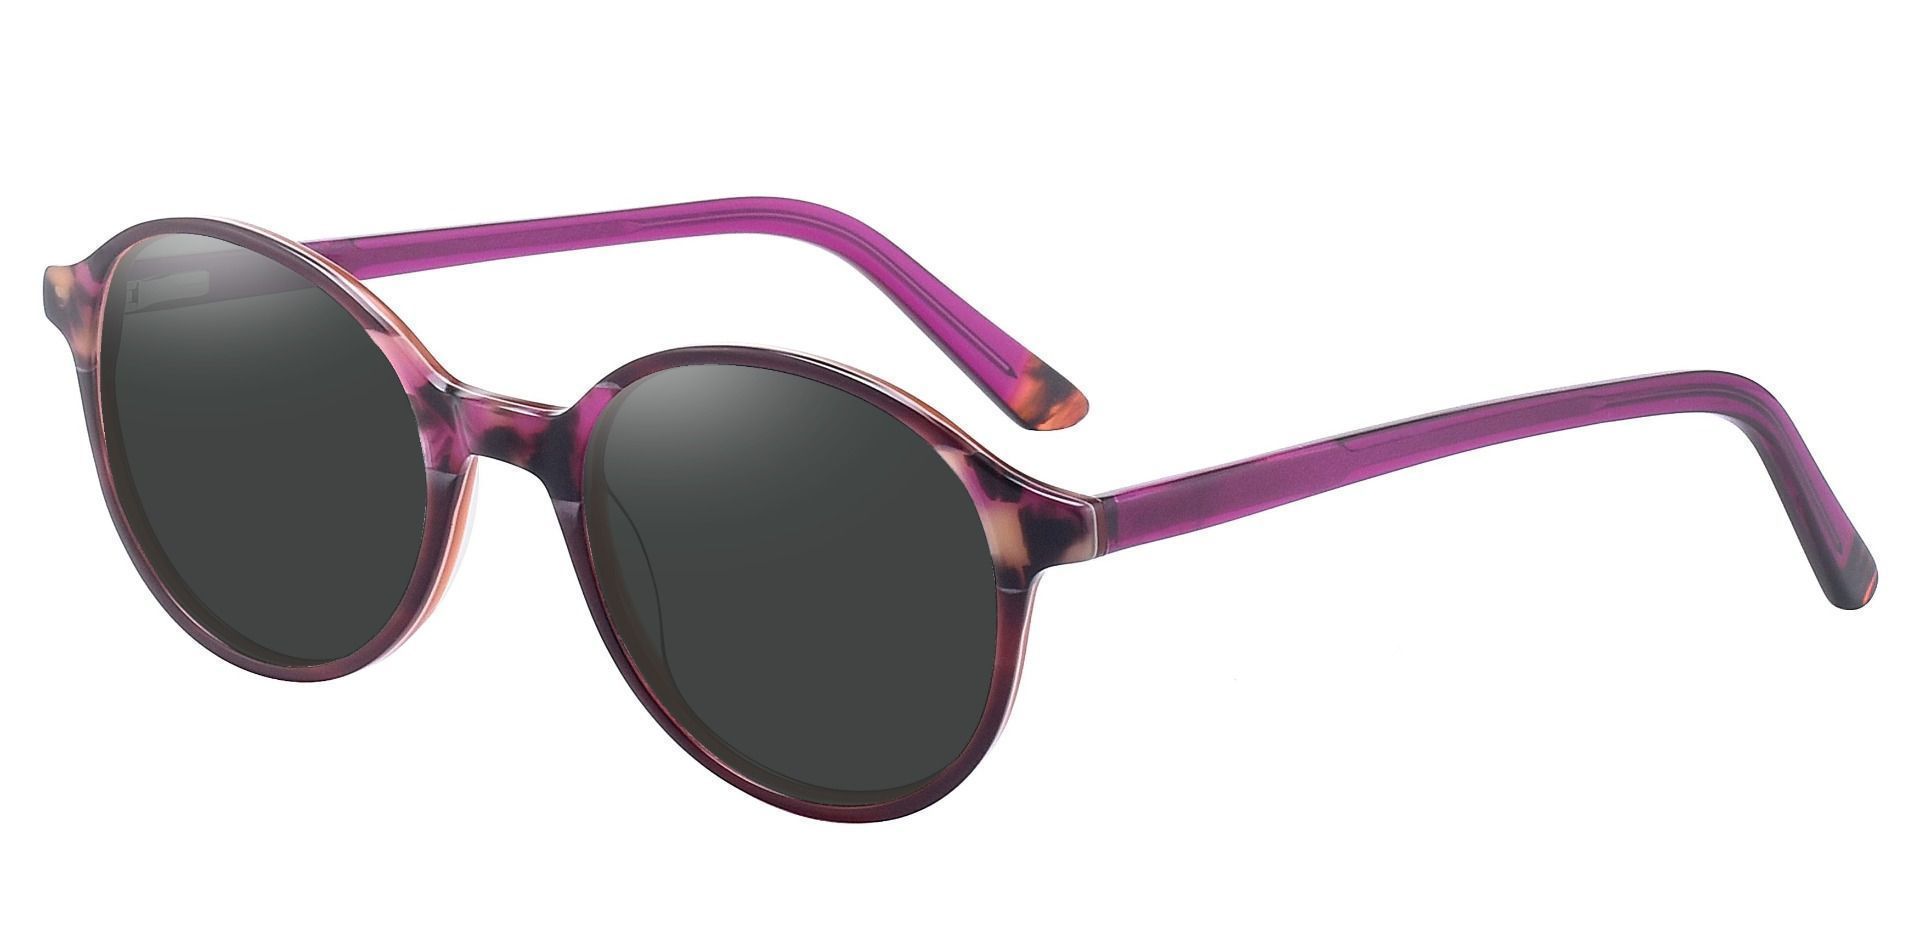 Bellamy Oval Non-Rx Sunglasses - Purple Frame With Gray Lenses